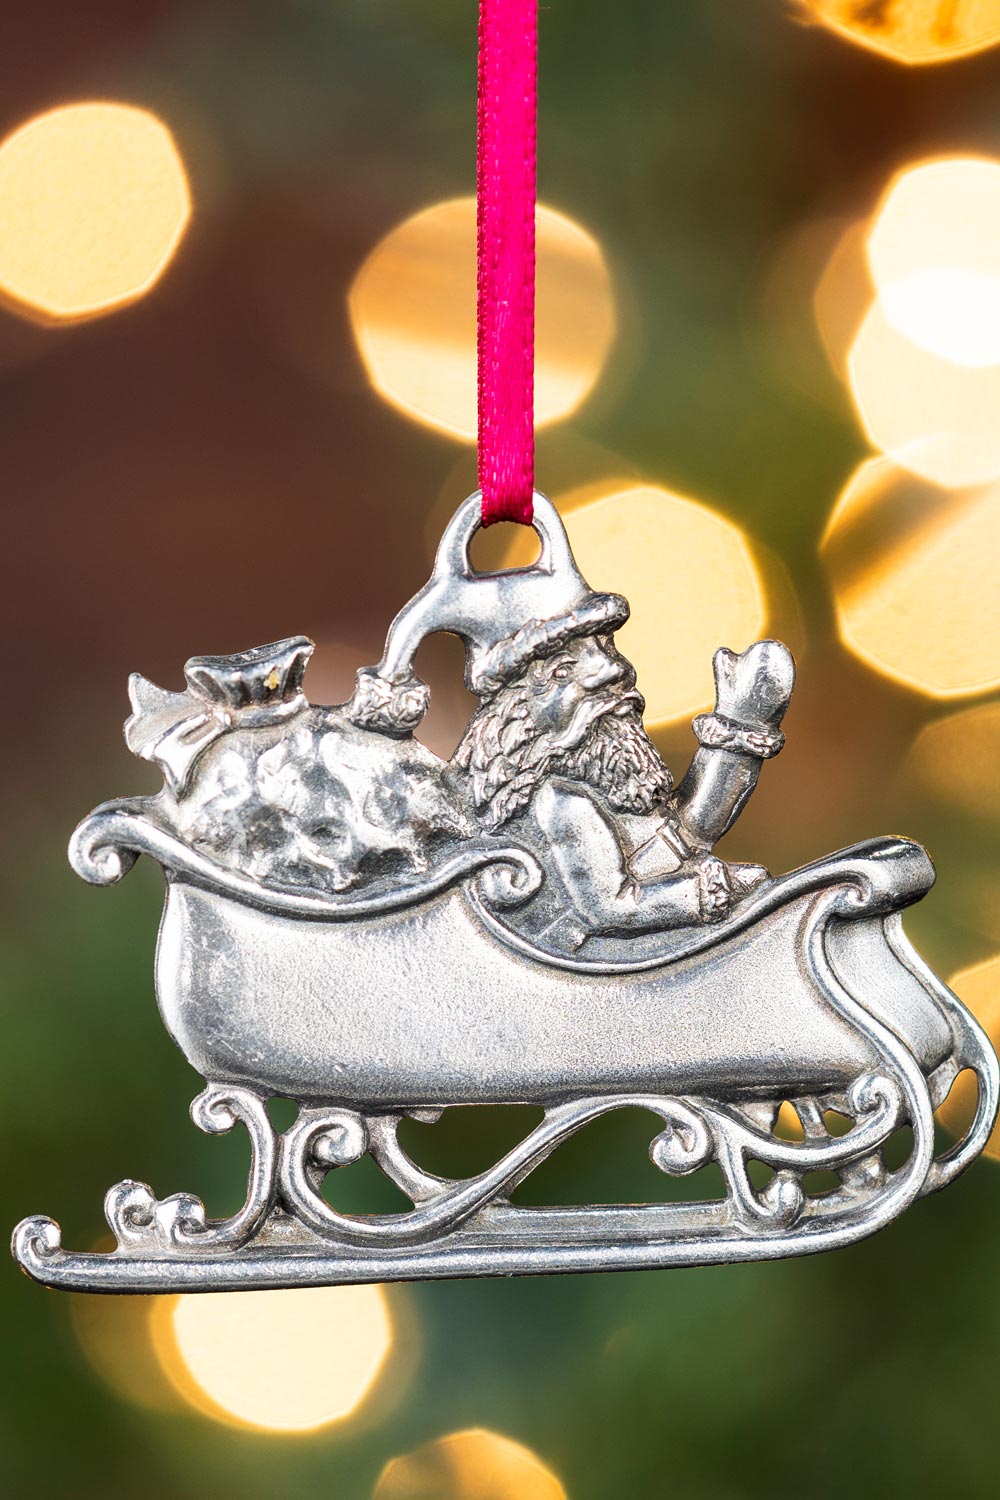 Santa in Sleigh Ornament